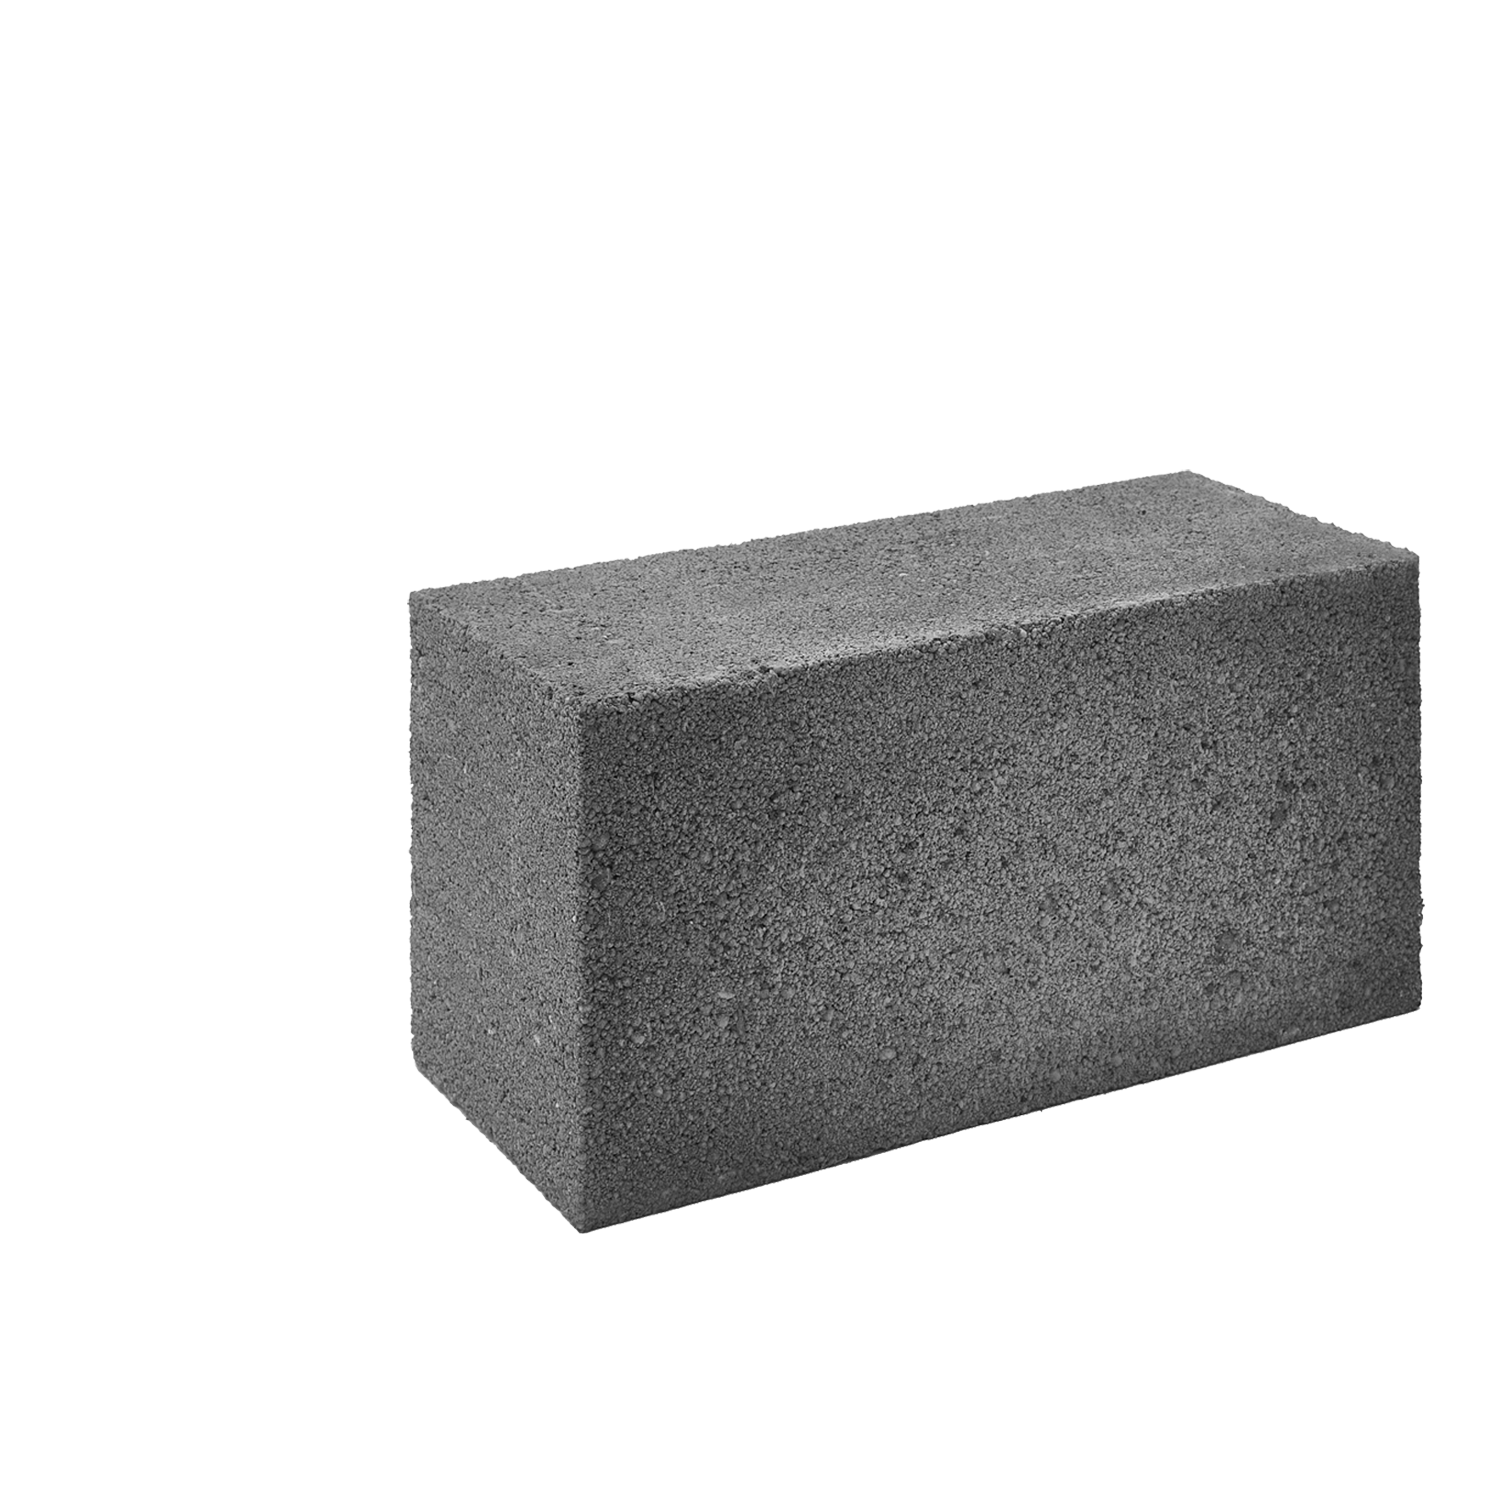 Lignalite Concrete Block manufactured by Lignacite